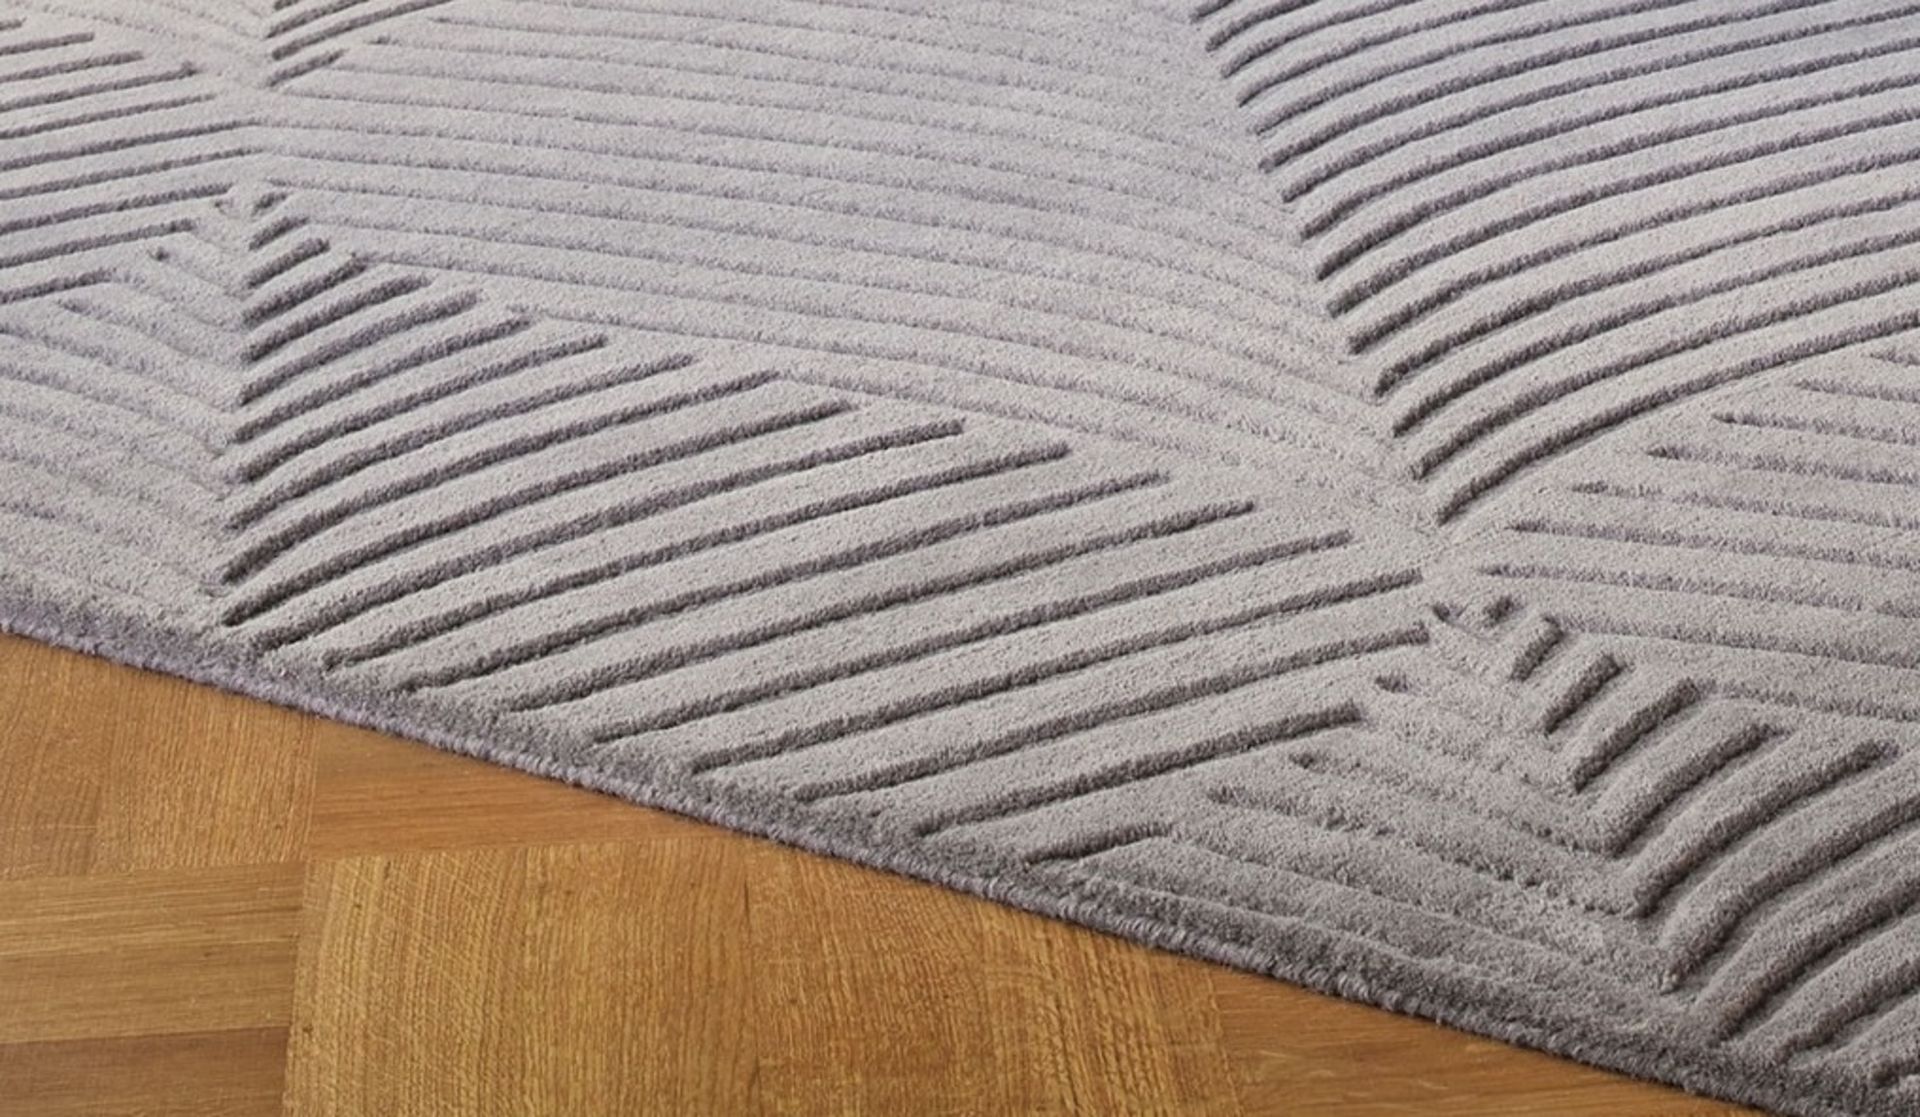 1 x Wedgwood FOLIA 100% Pure Wool Hand Tufted Rug - Size: 120 x 180cm - Original RRP £364.00 - Image 3 of 4